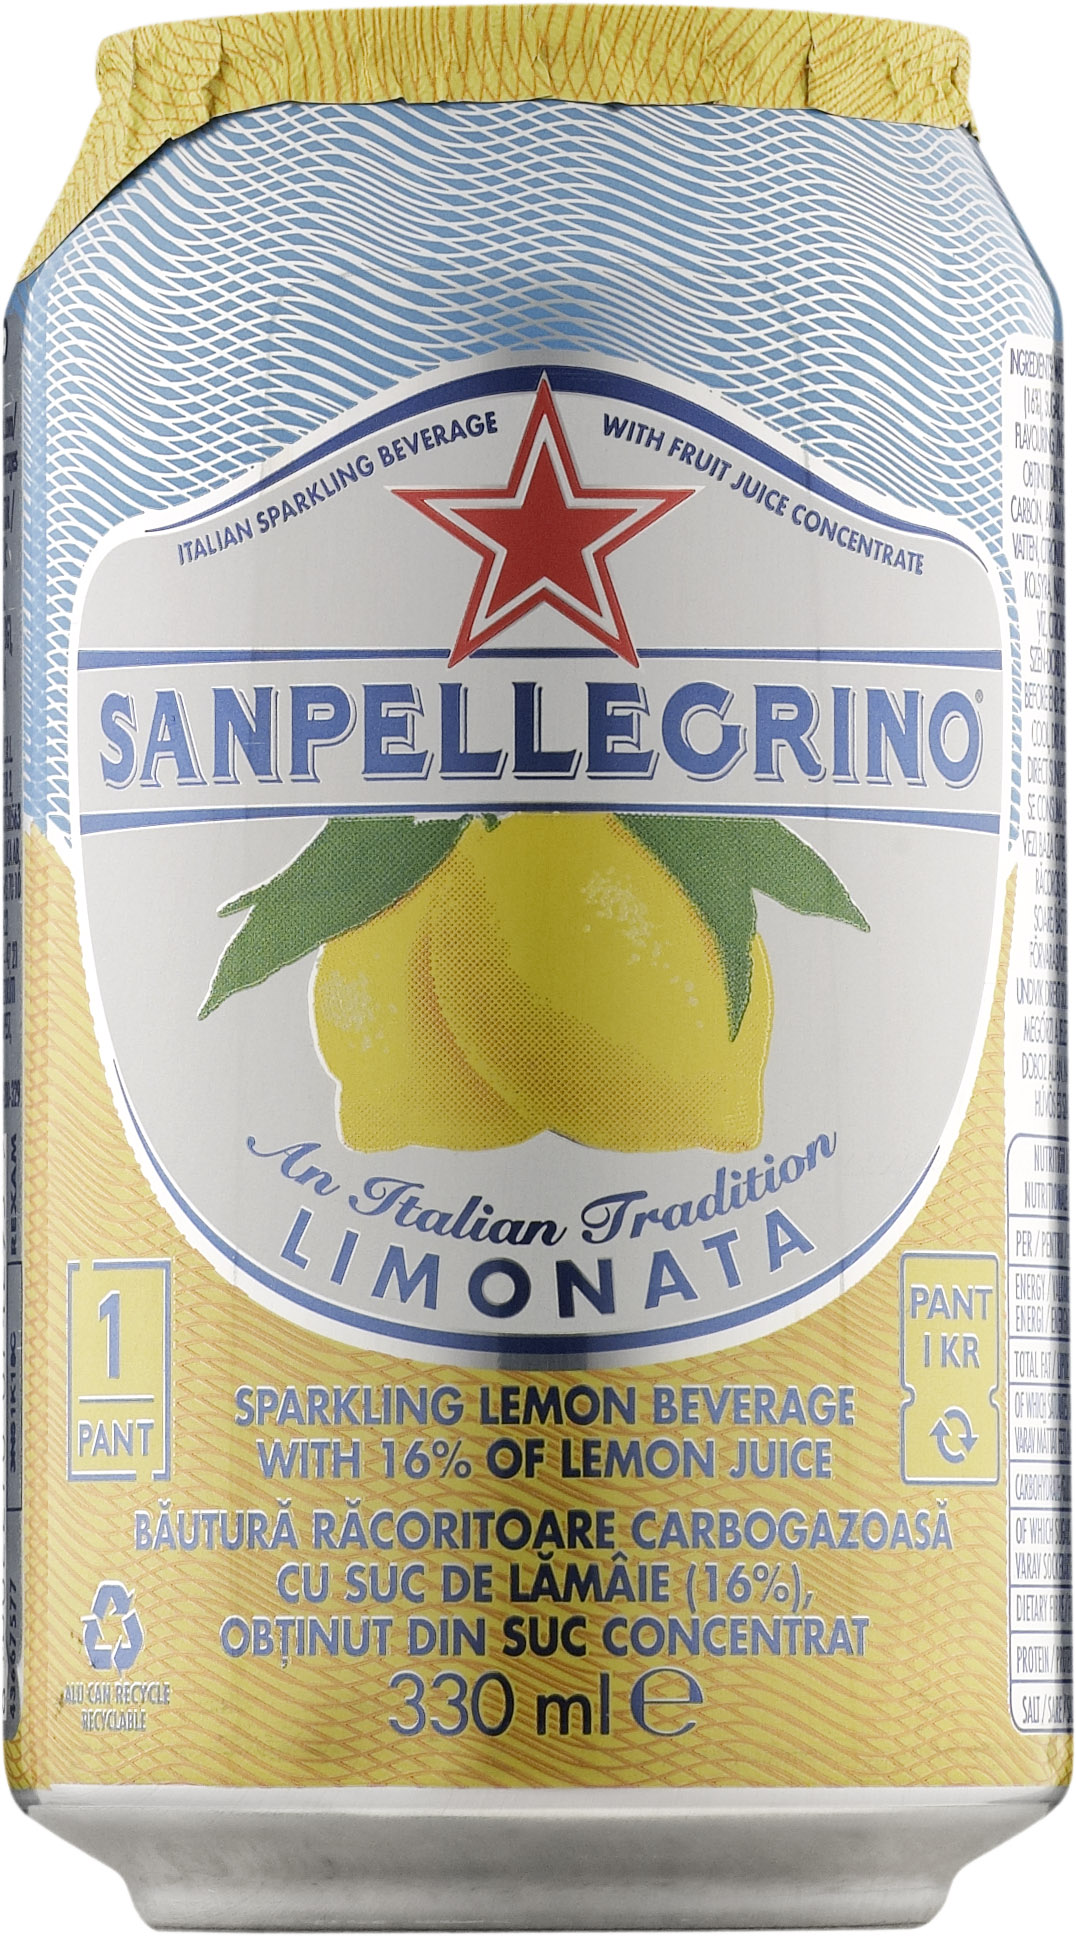 SanPellegrino San Pellegrino Limonata can